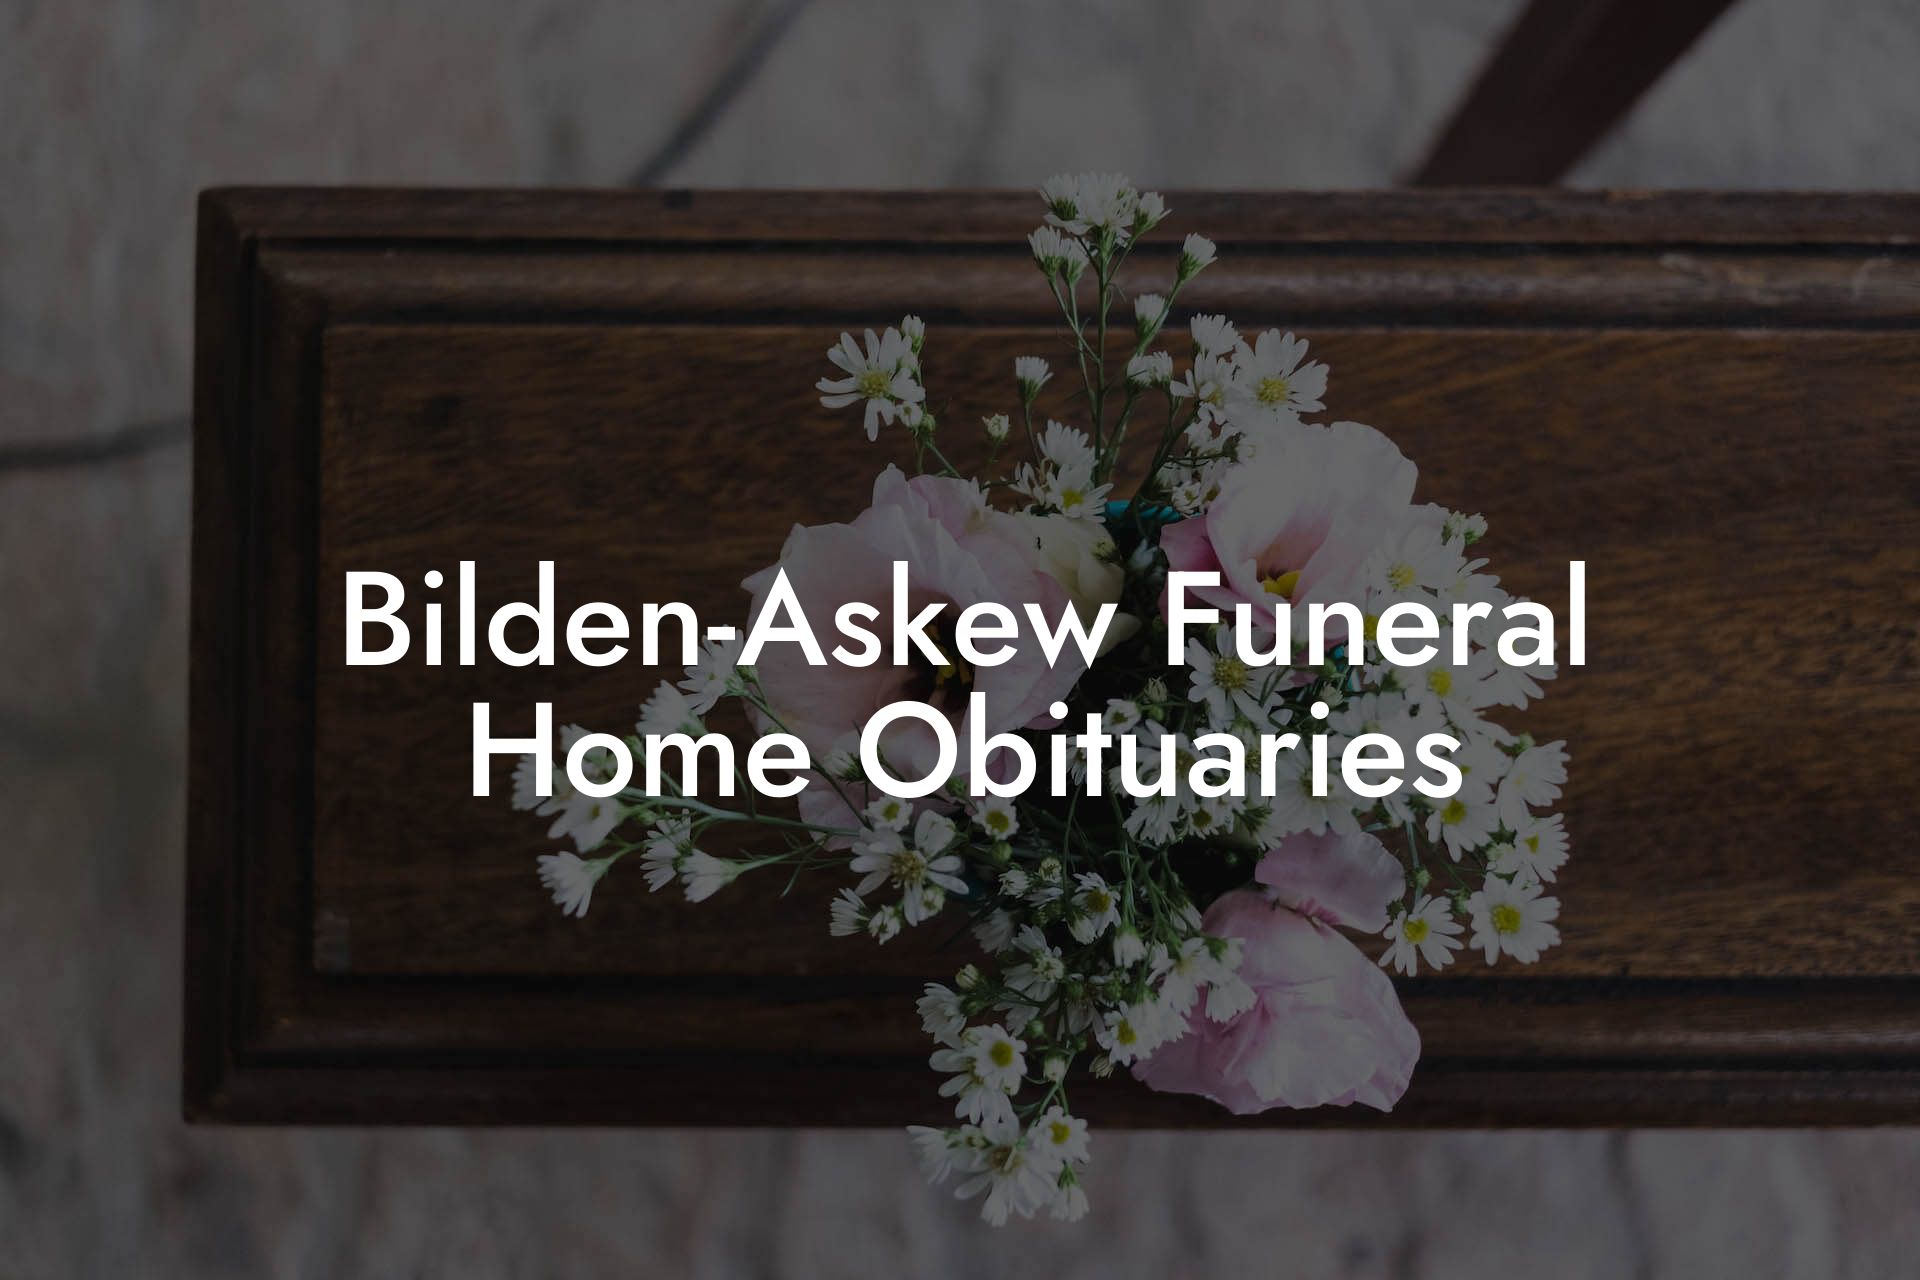 Bilden-Askew Funeral Home Obituaries